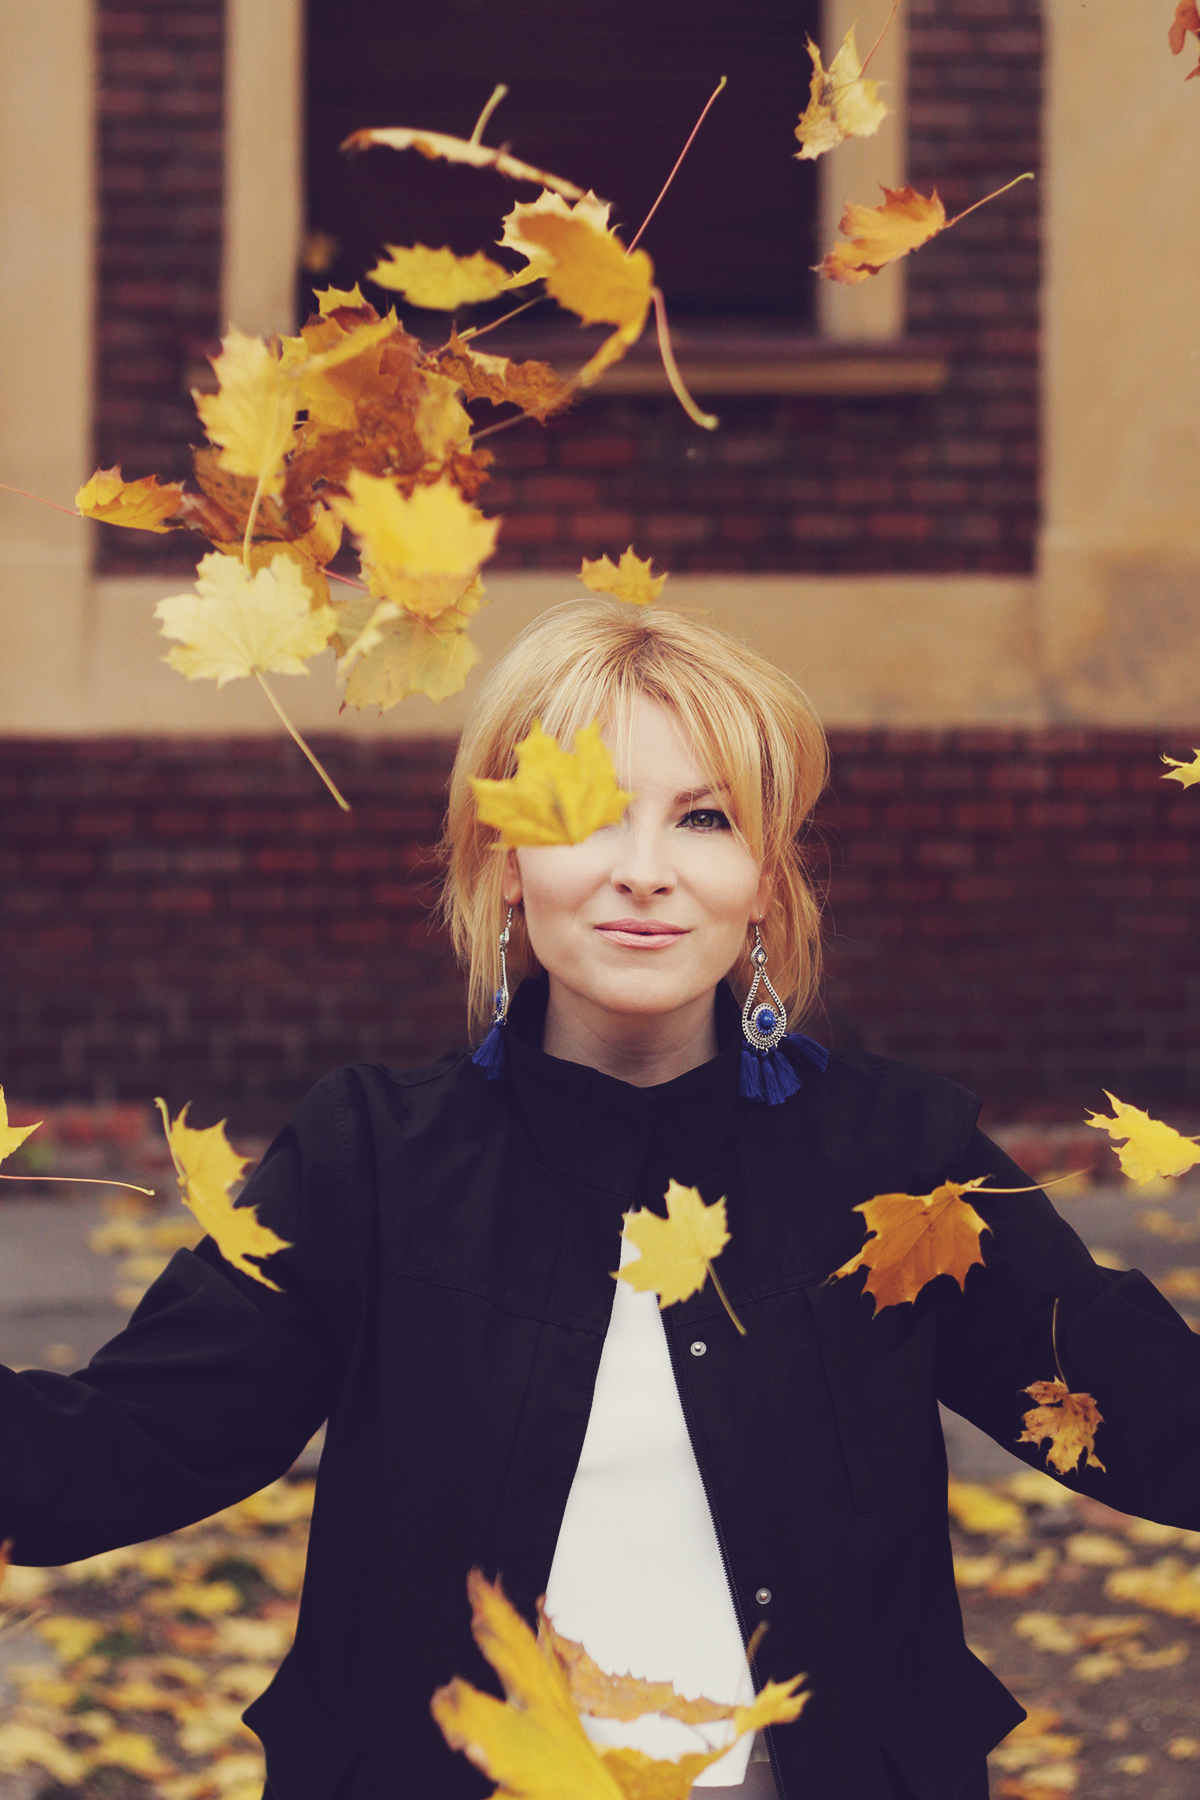 autumn, autumn leafs in the air, girl, portrait, tassel earrings, navy jacket, white top